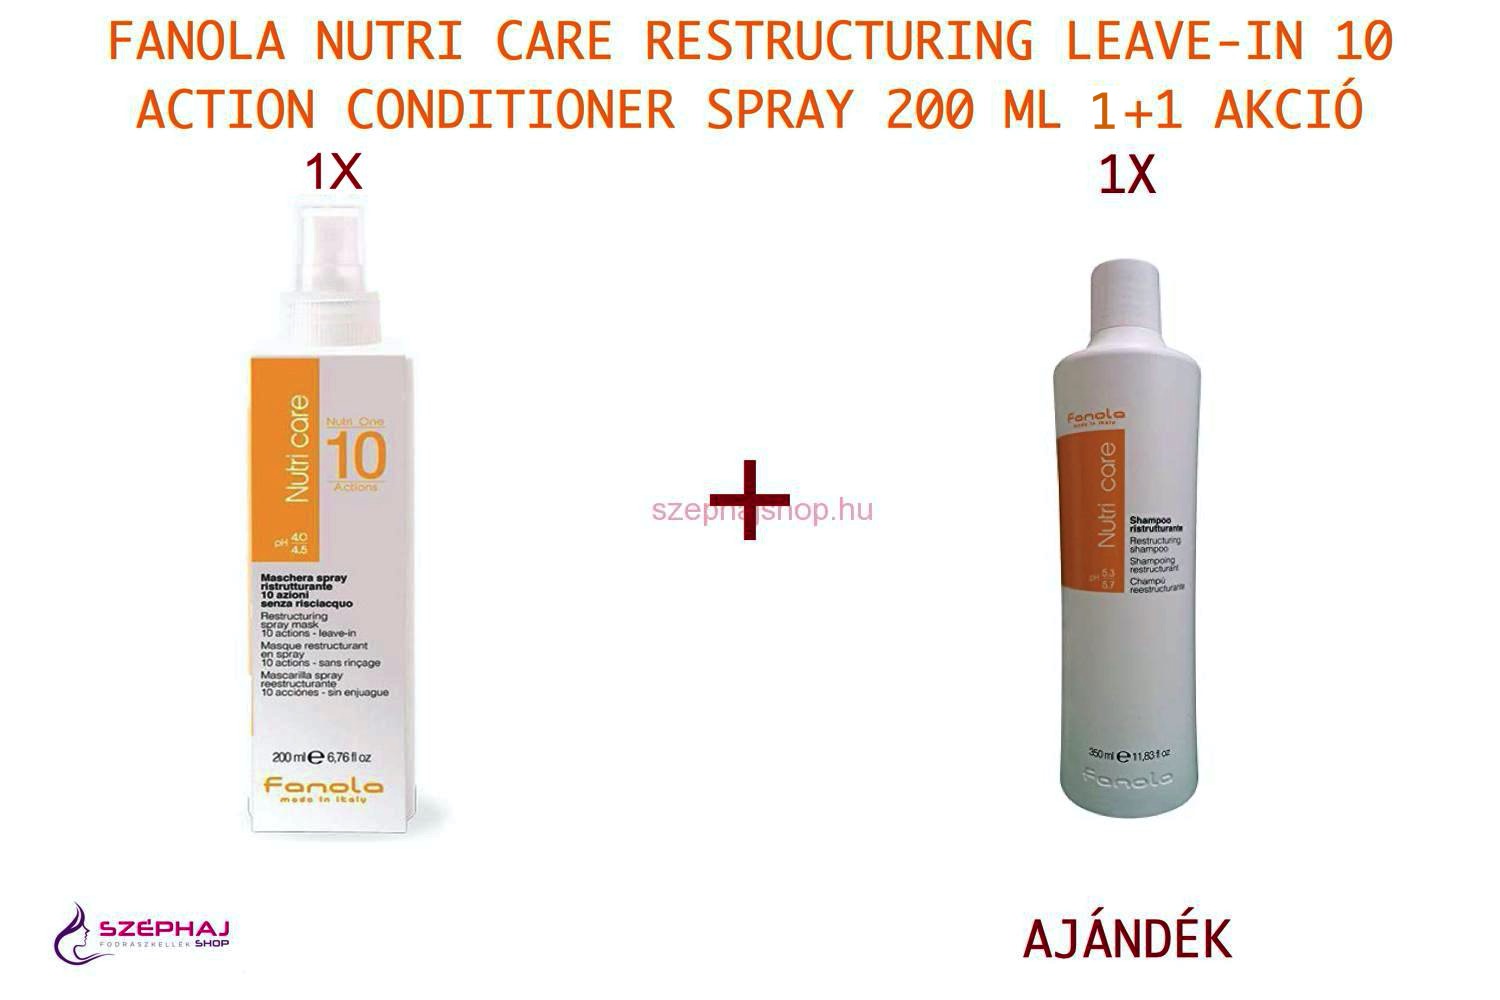 FANOLA Nutri Care Restructuring Leave-In Conditioner Spray 200 ml 1+1 AKCIÓ